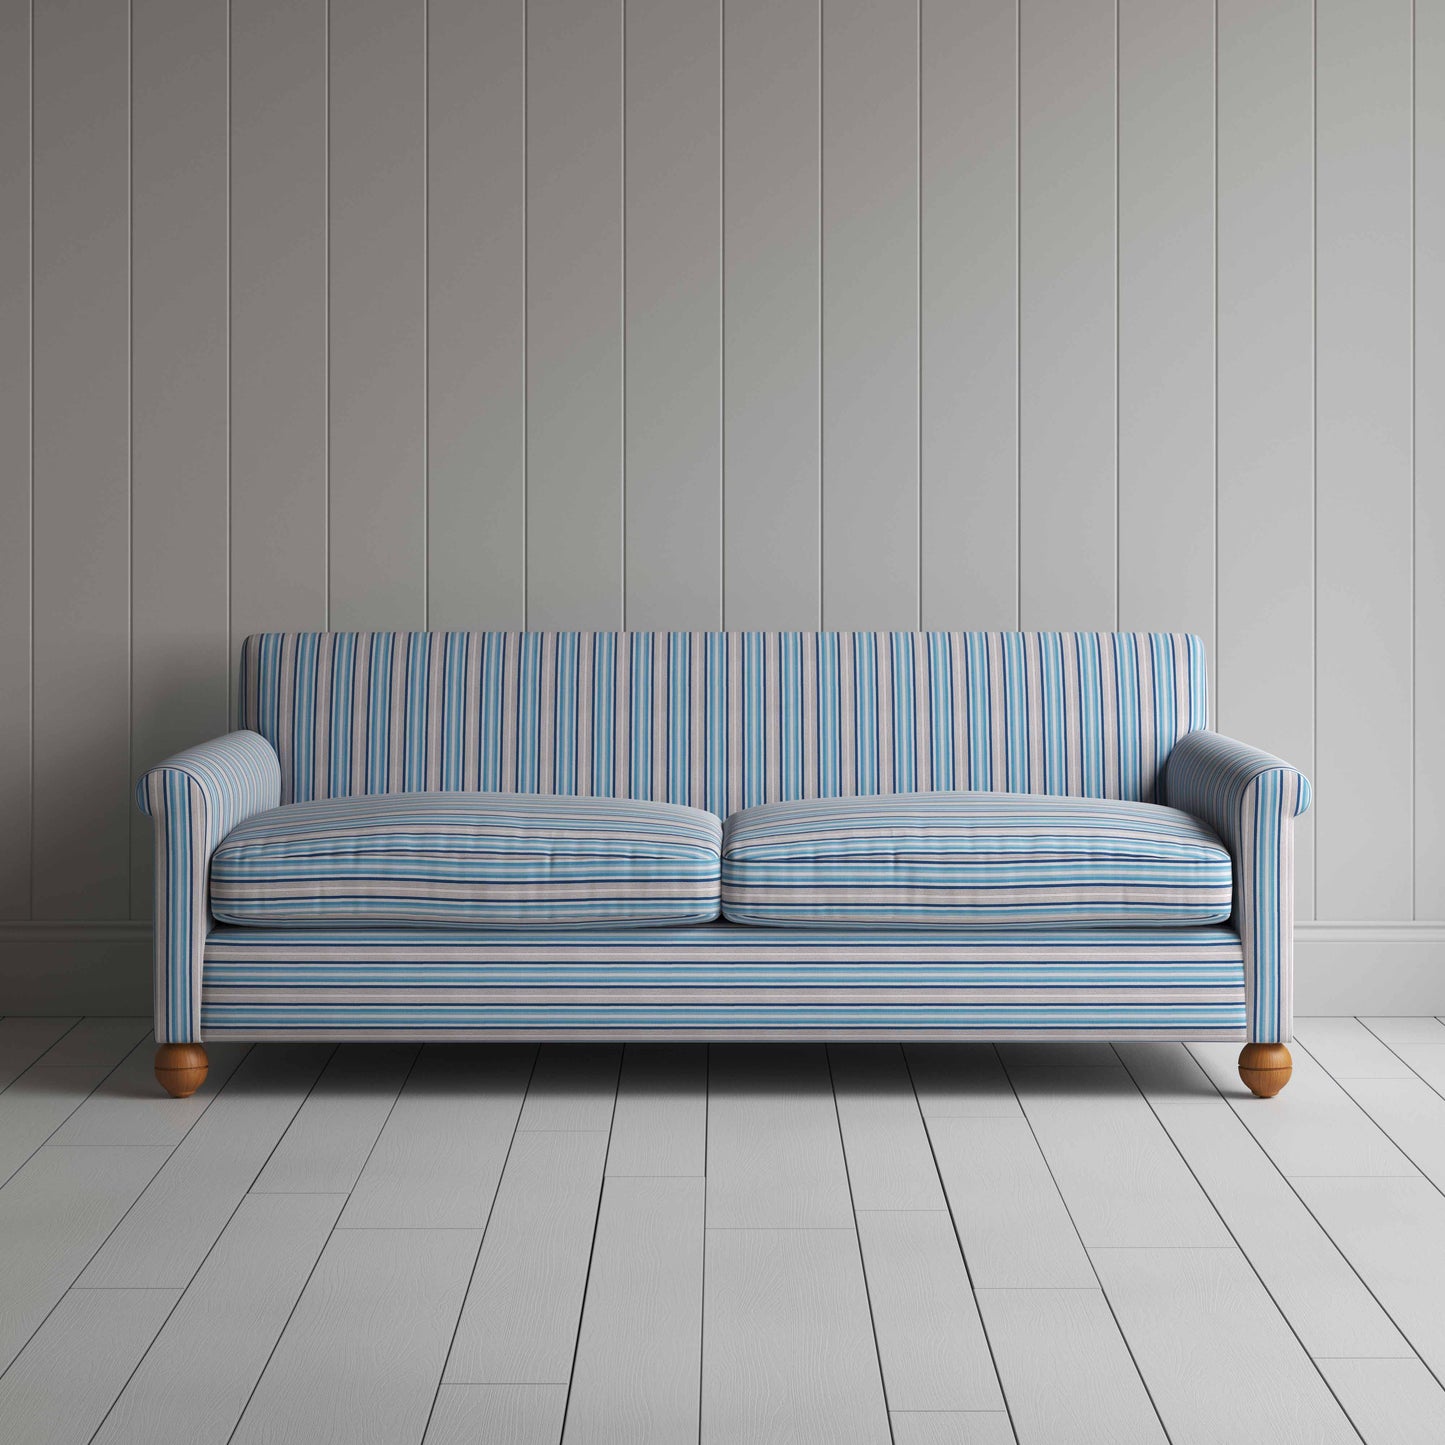 Idler 4 Seater Sofa in Slow Lane Cotton Linen, Blue